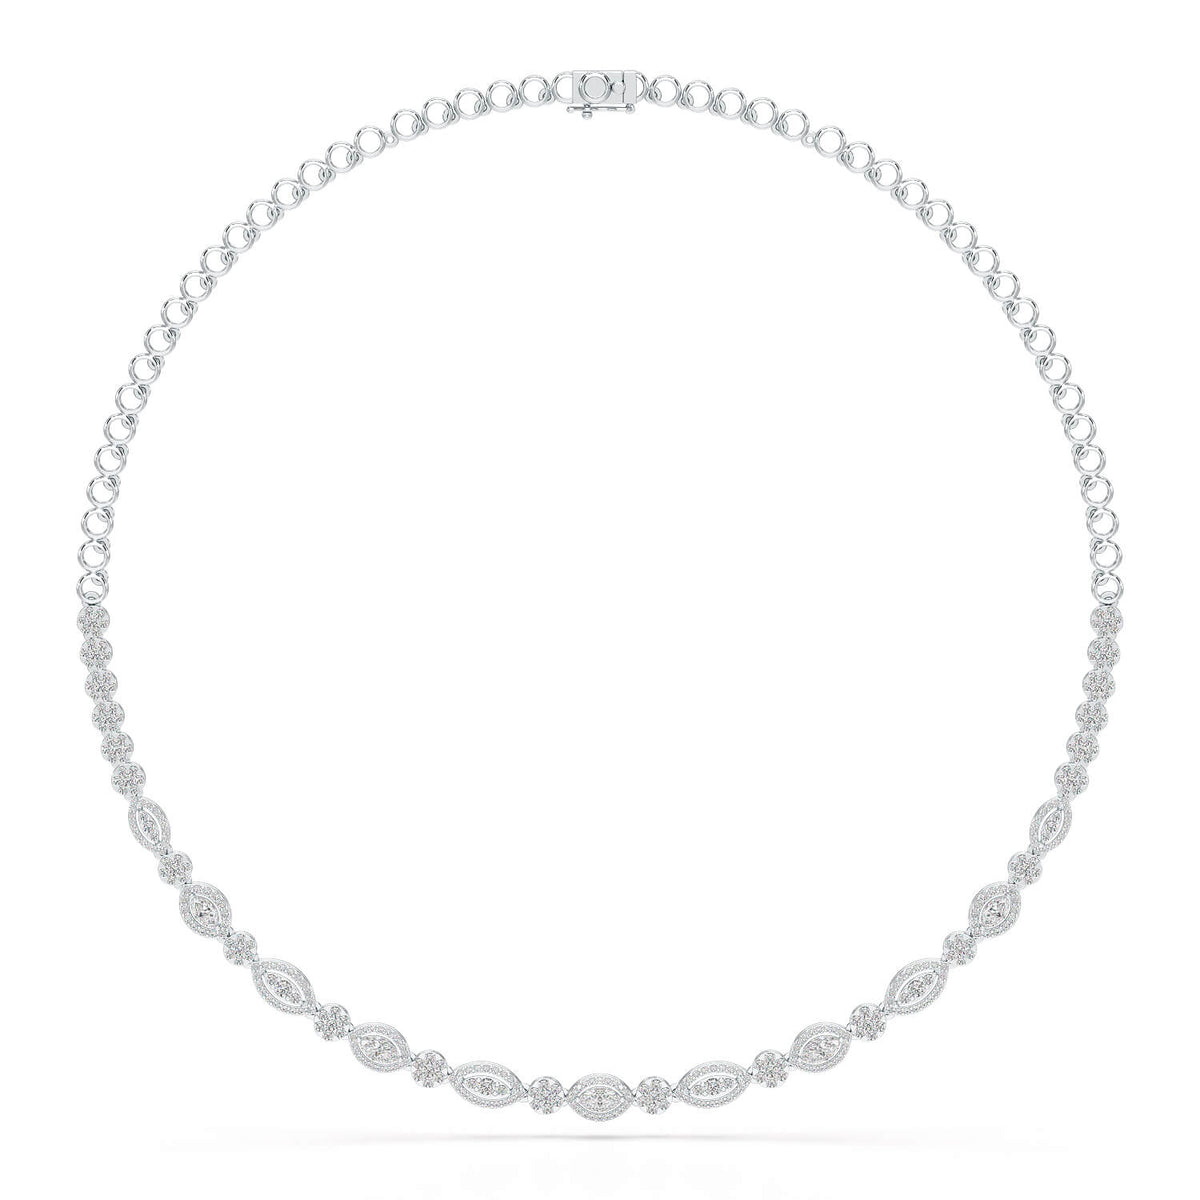 4.53 CT Marquise Cut Lab Diamond Tennis Necklace